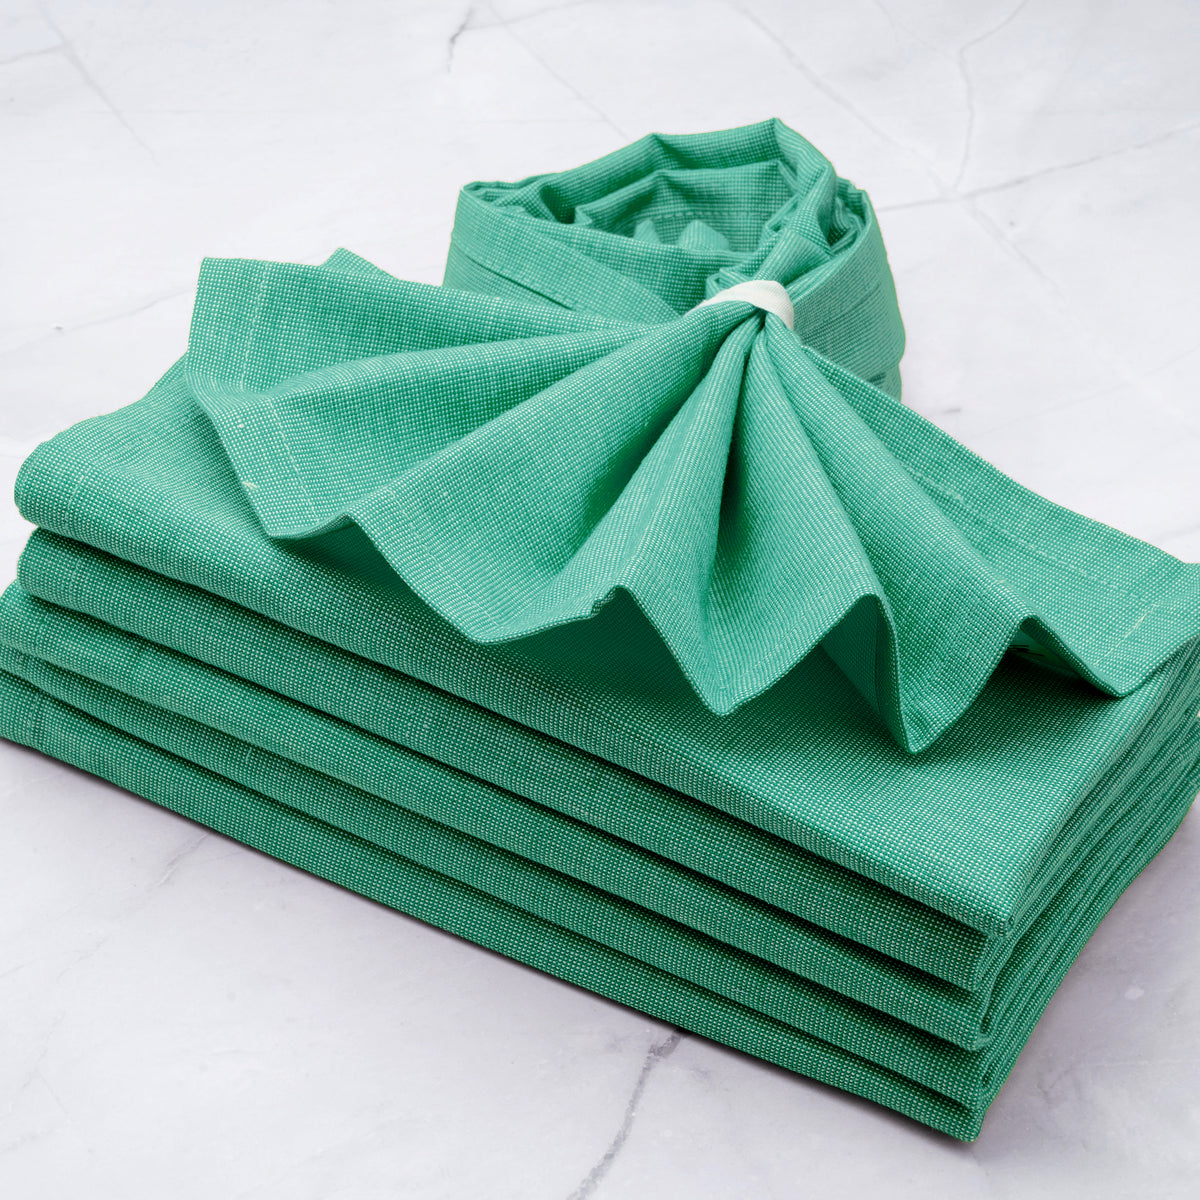 Solino Home Cotton Linen Napkins Set of 4 – 20 x 20 Inch Cloth Napkins,  Hemstitch Dinner Napkins Apple Green – Washable Fabric Napkins for Indoor